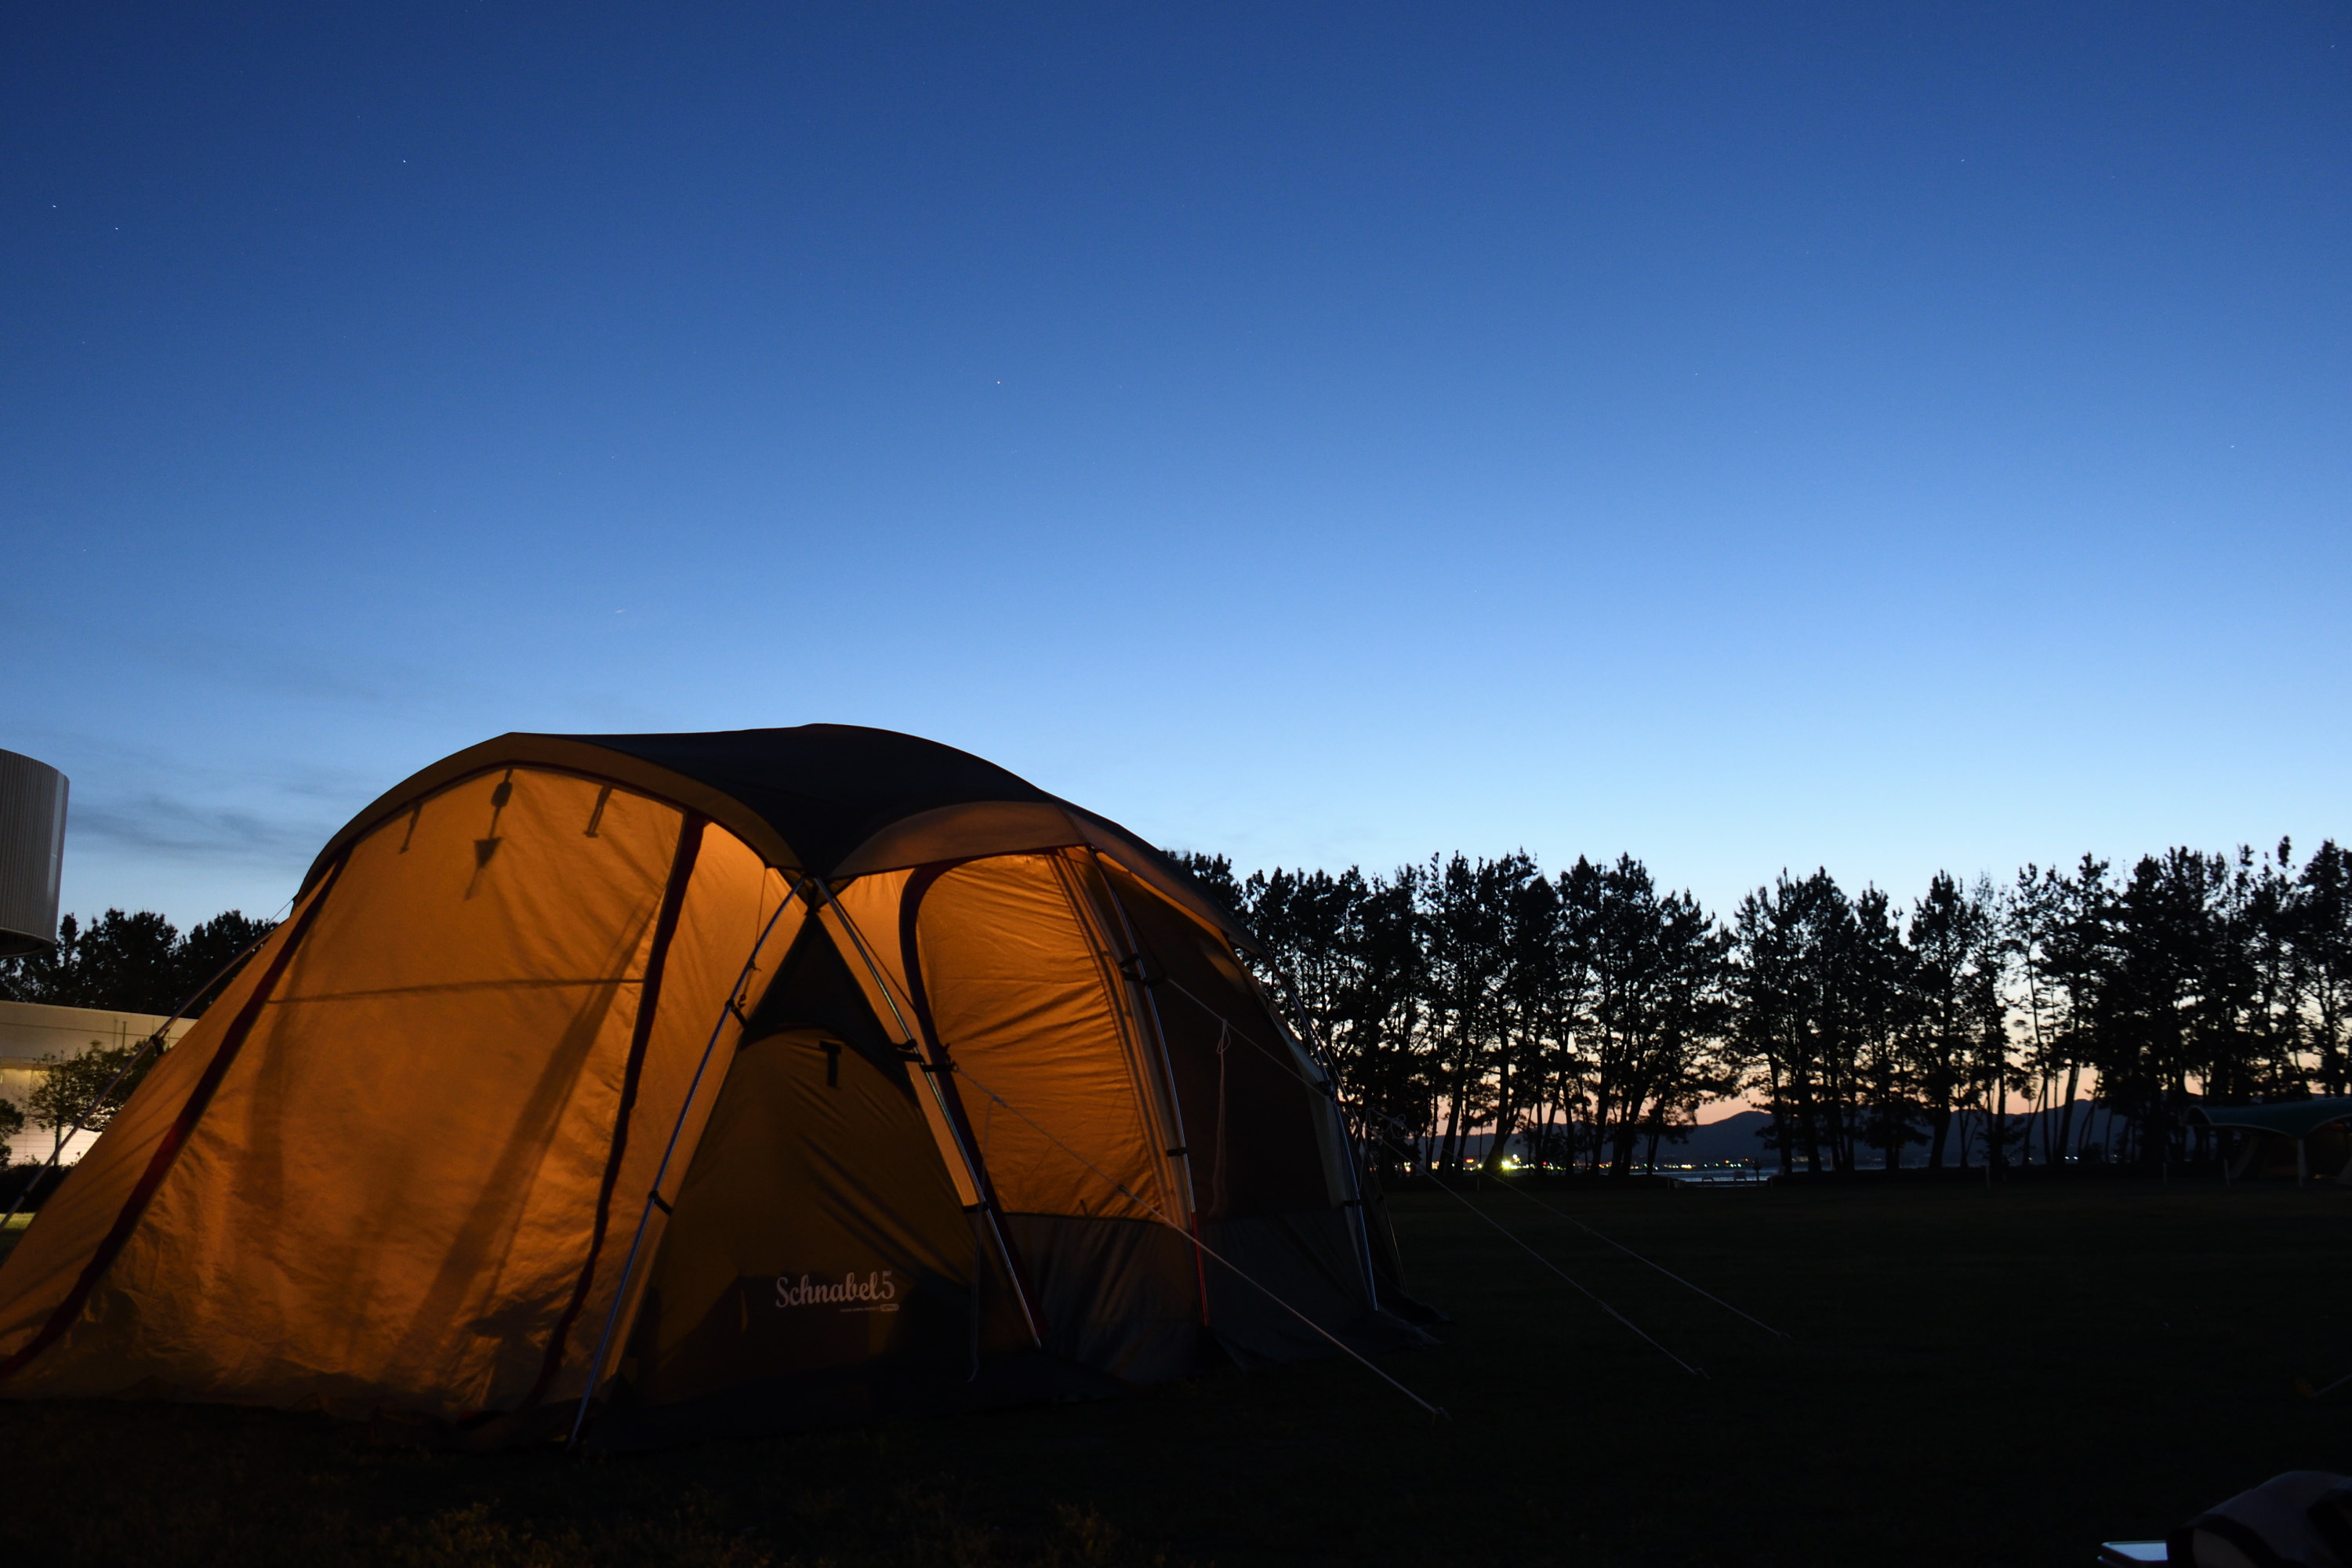 ogawaシュナーベル5のレビュー | Camping Lab.